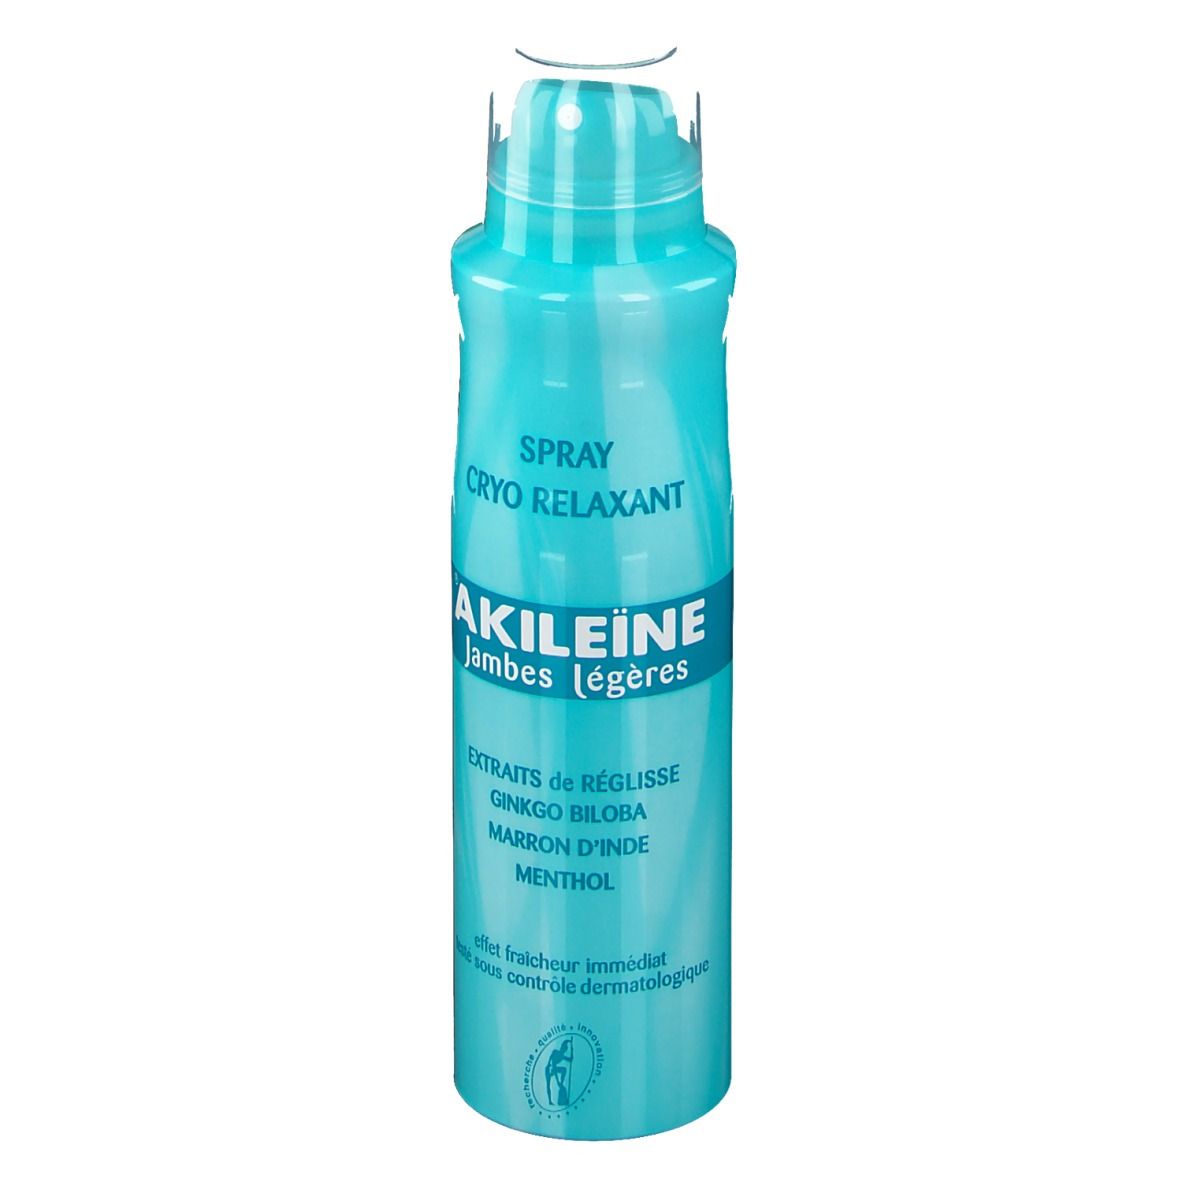 AKILEINE® Spray Cryo Relaxant Jambes Légères